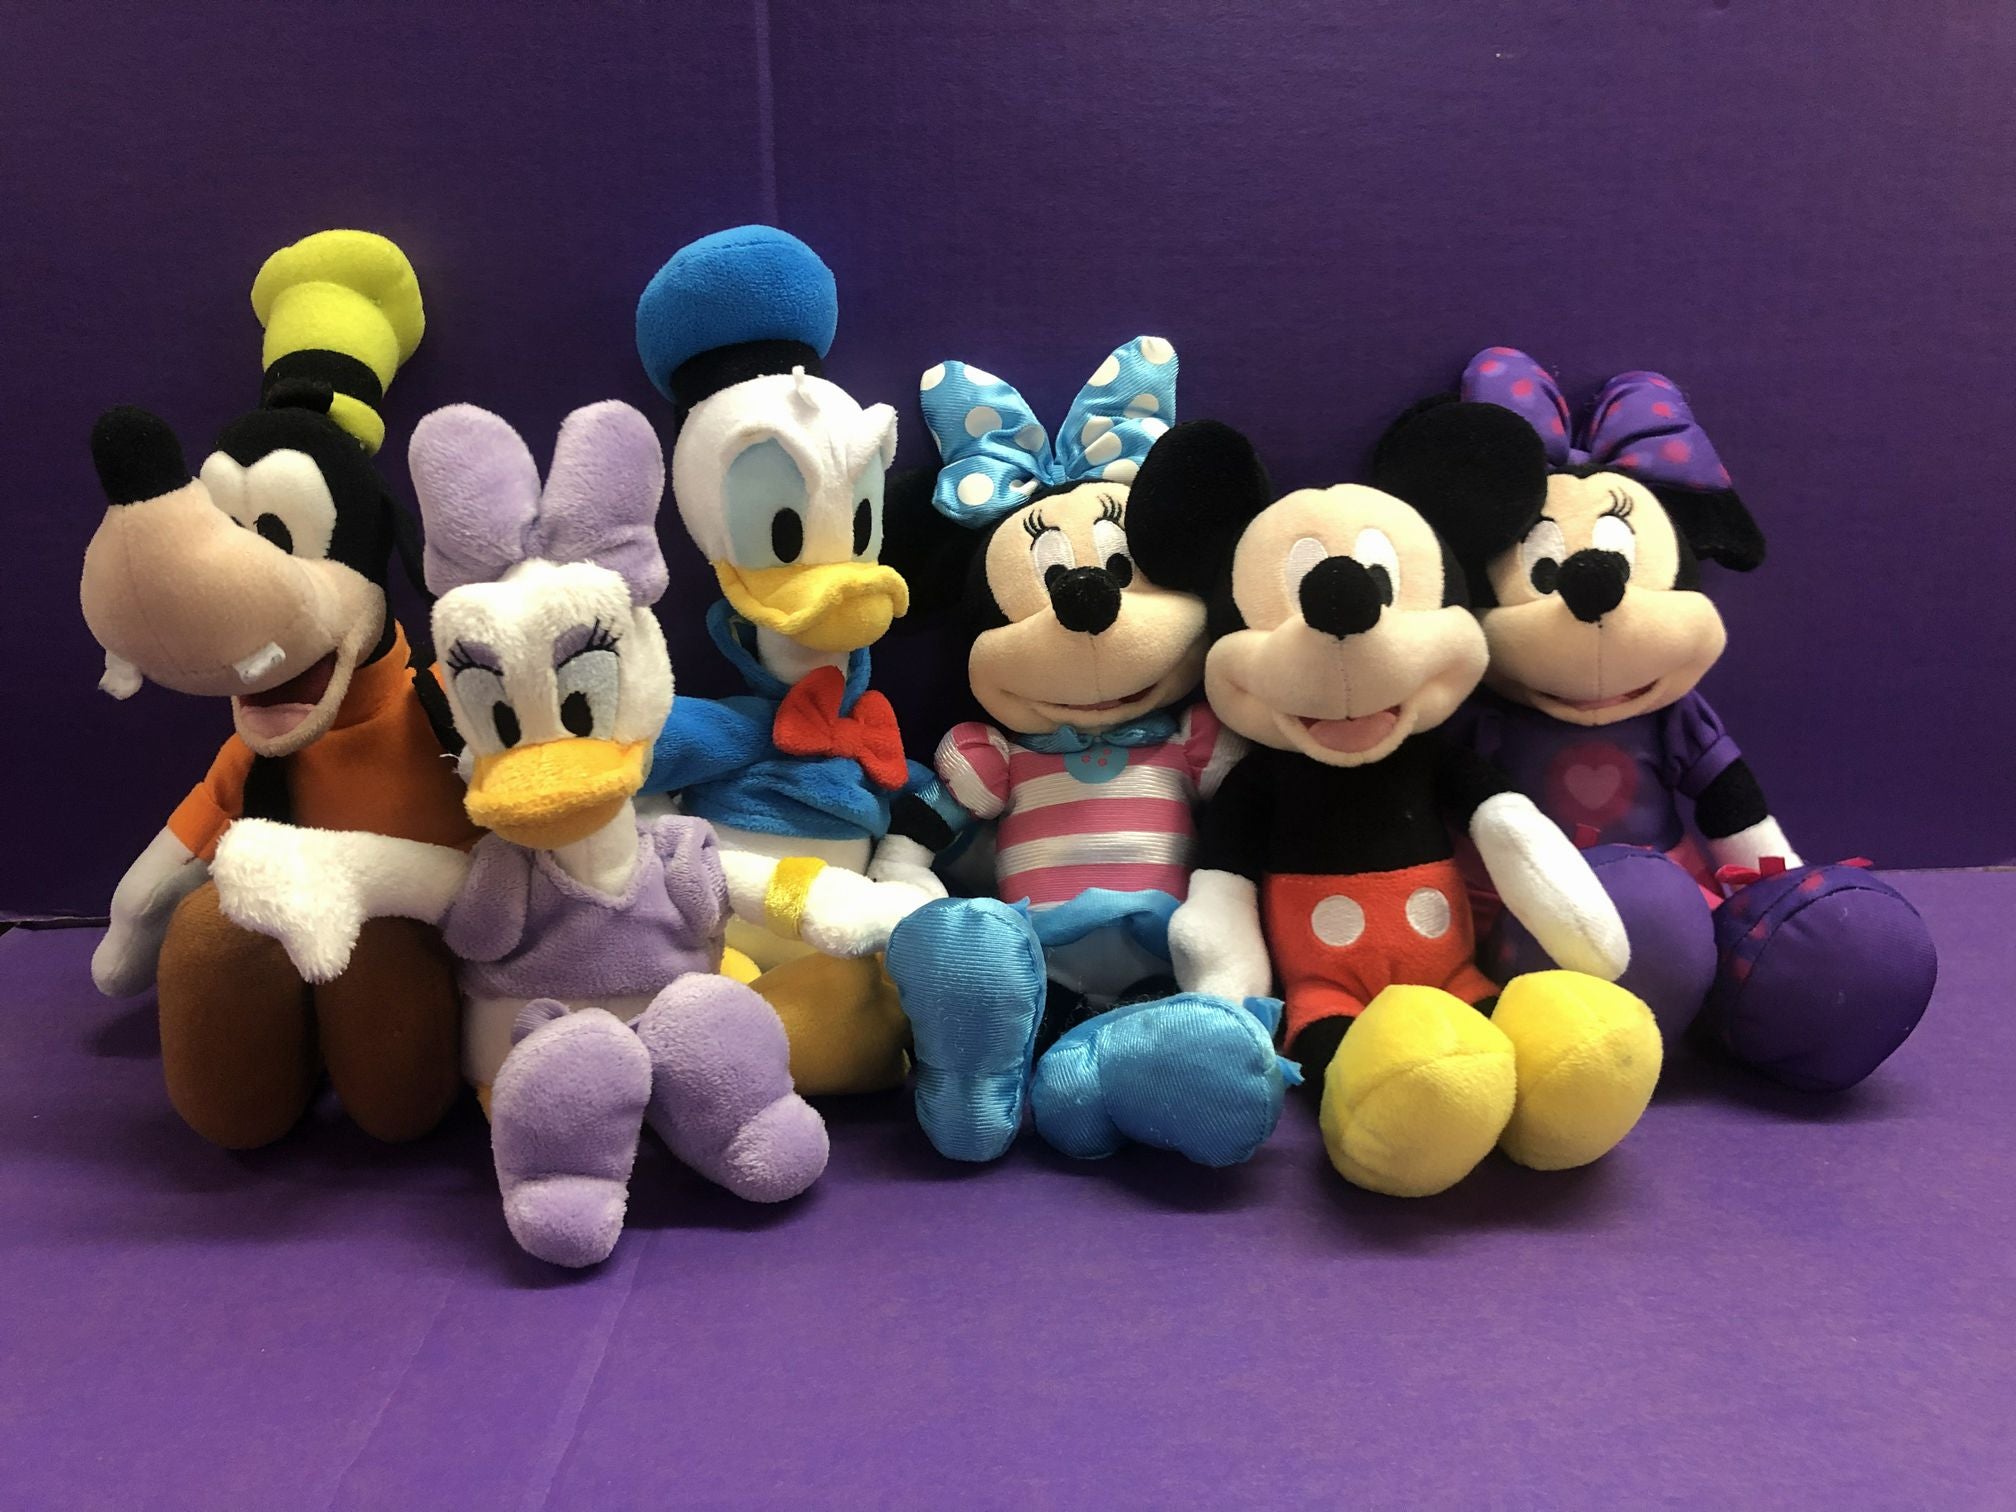 Disney Mickey Mouse & Friends 6pc plush stuffed animal set